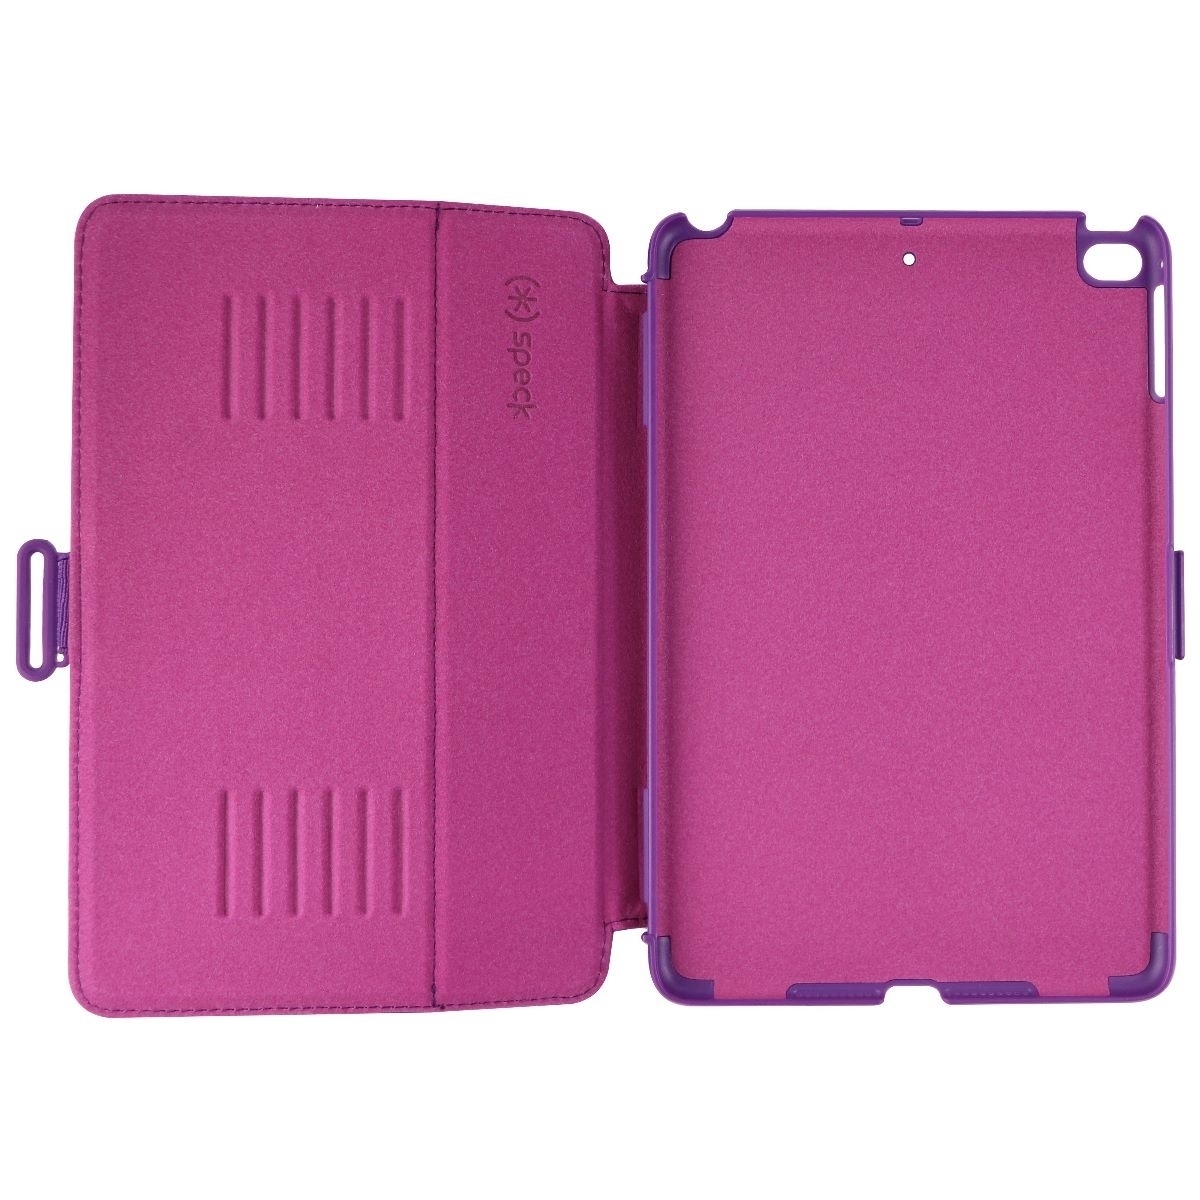 Speck Balance Folio Case Compatible With IPad Mini (2019) / IPad Mini 4 - Purple